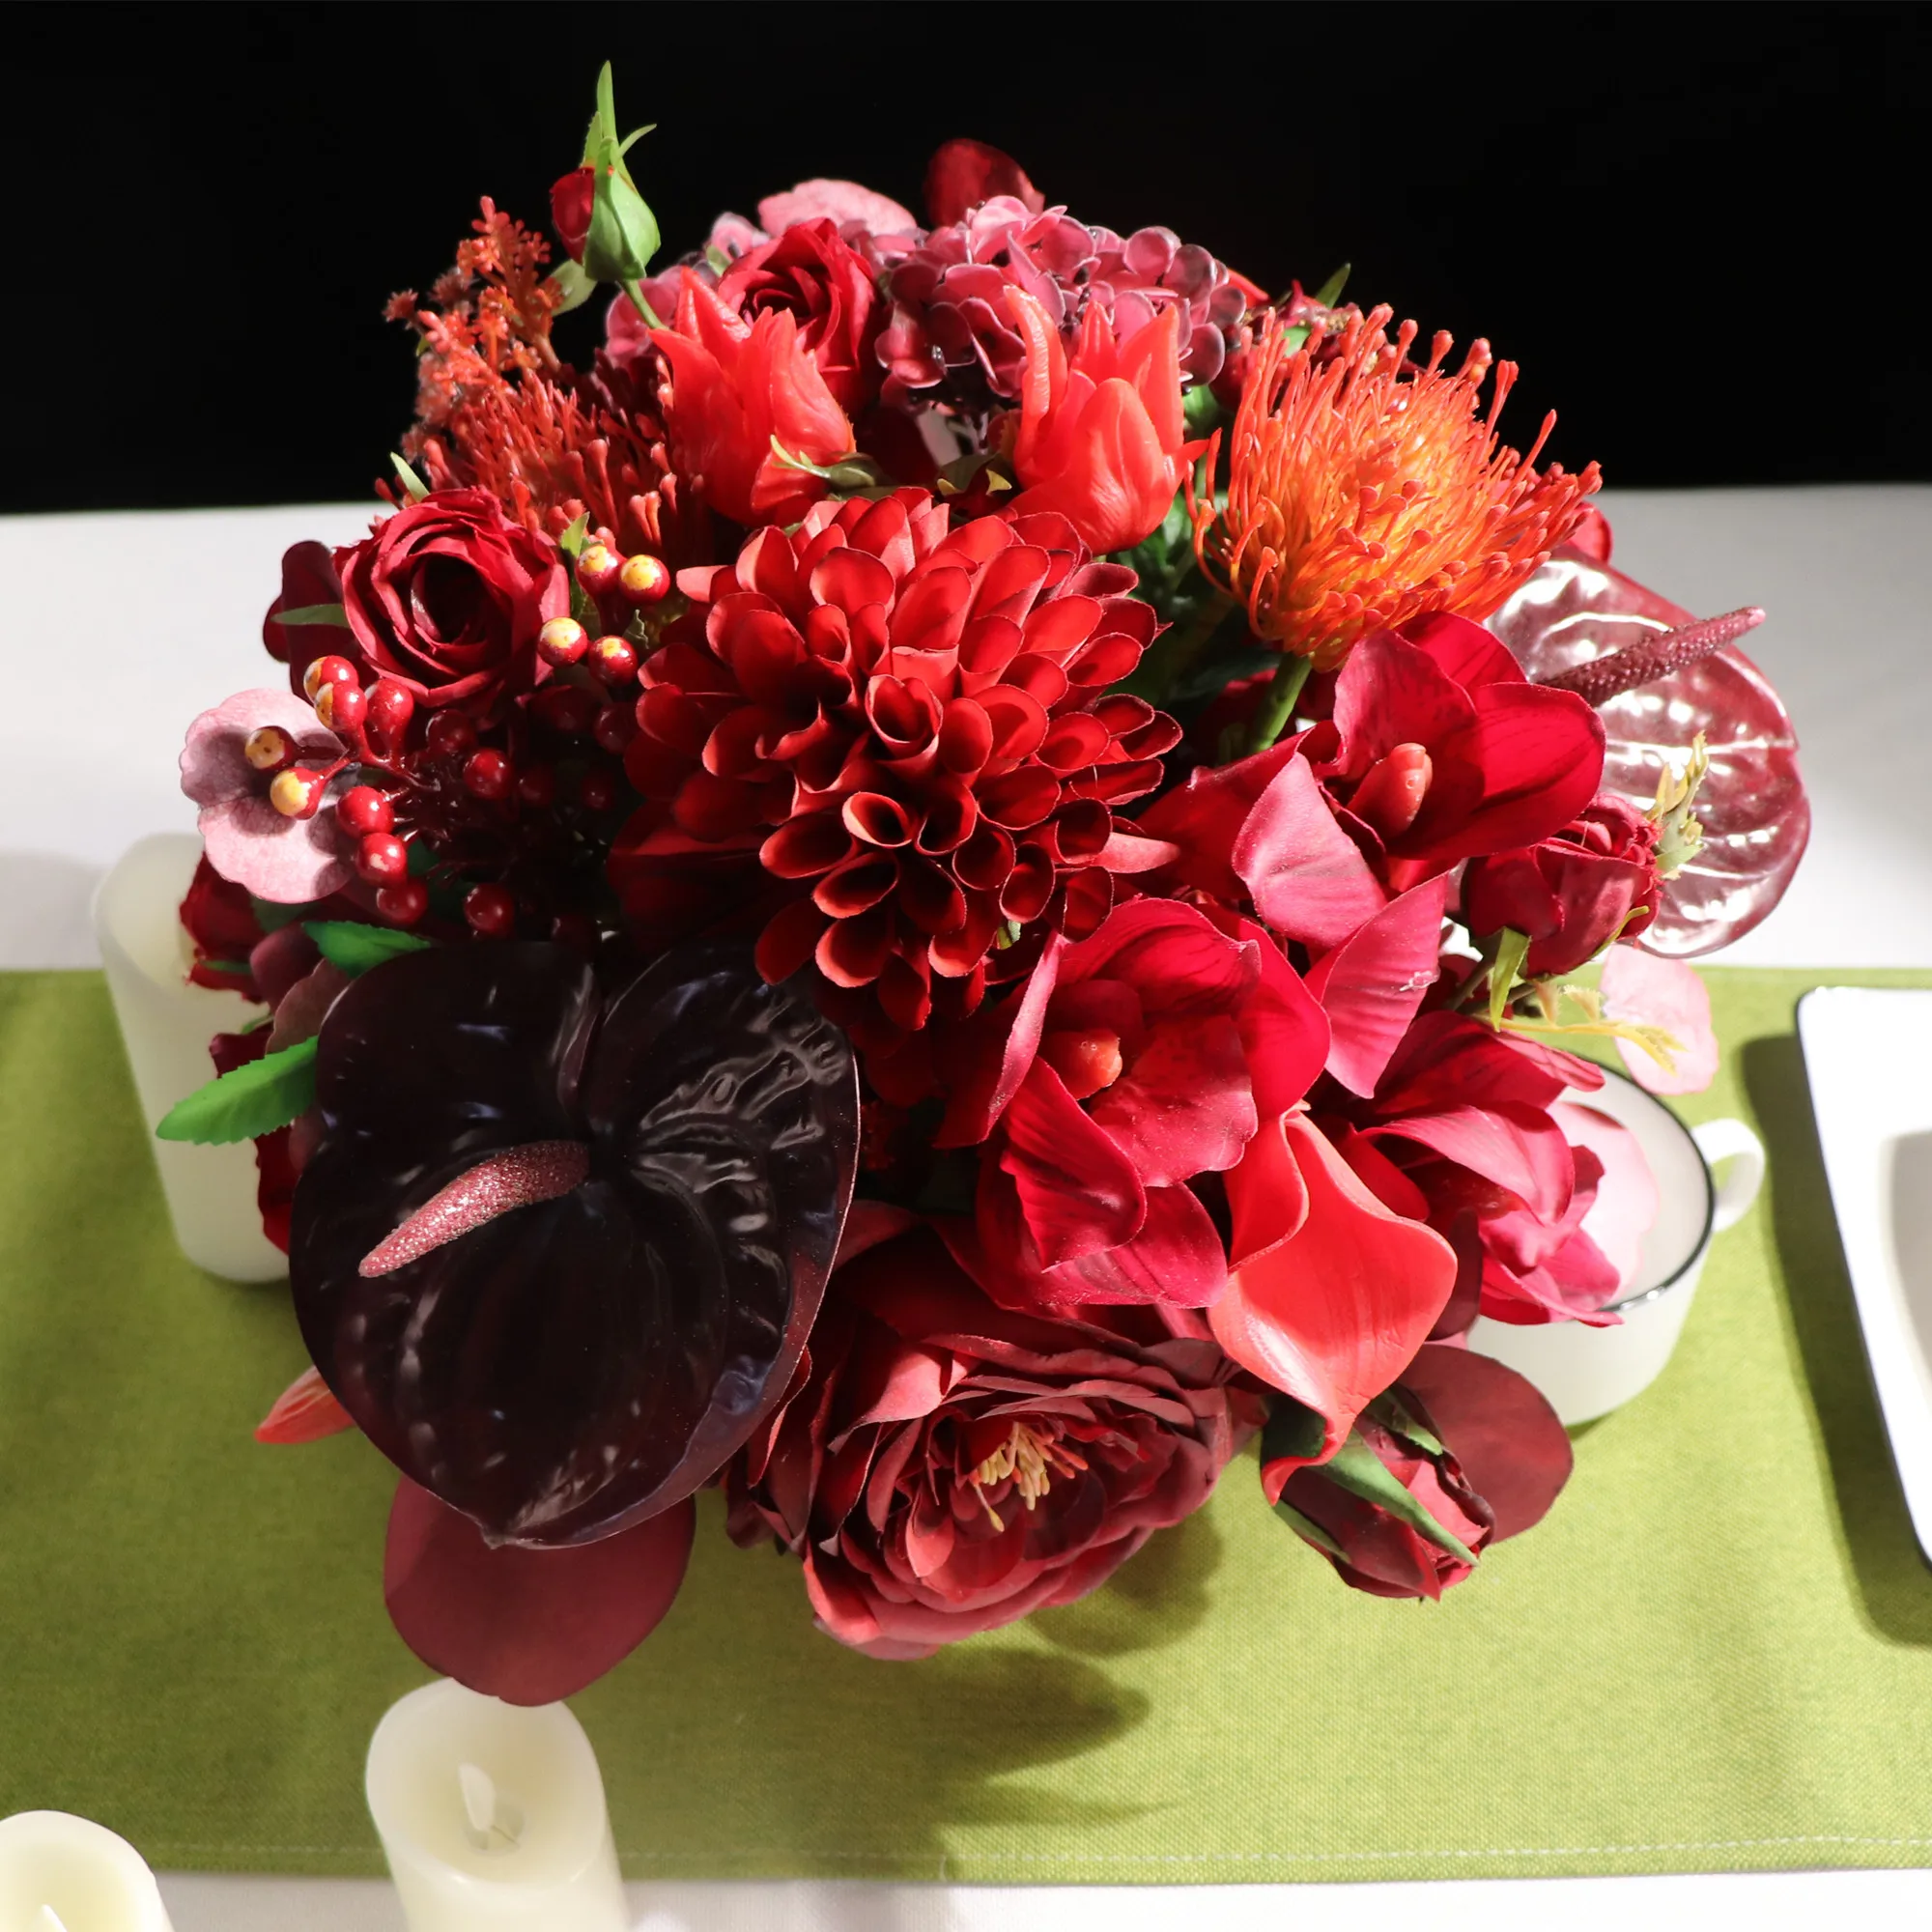 Red Dahia Rose Centerpiece (1 Set Bonsai With Carton Vase ) Tulip Customized Designed Table Luxury Flower Arrangment - INDIGO